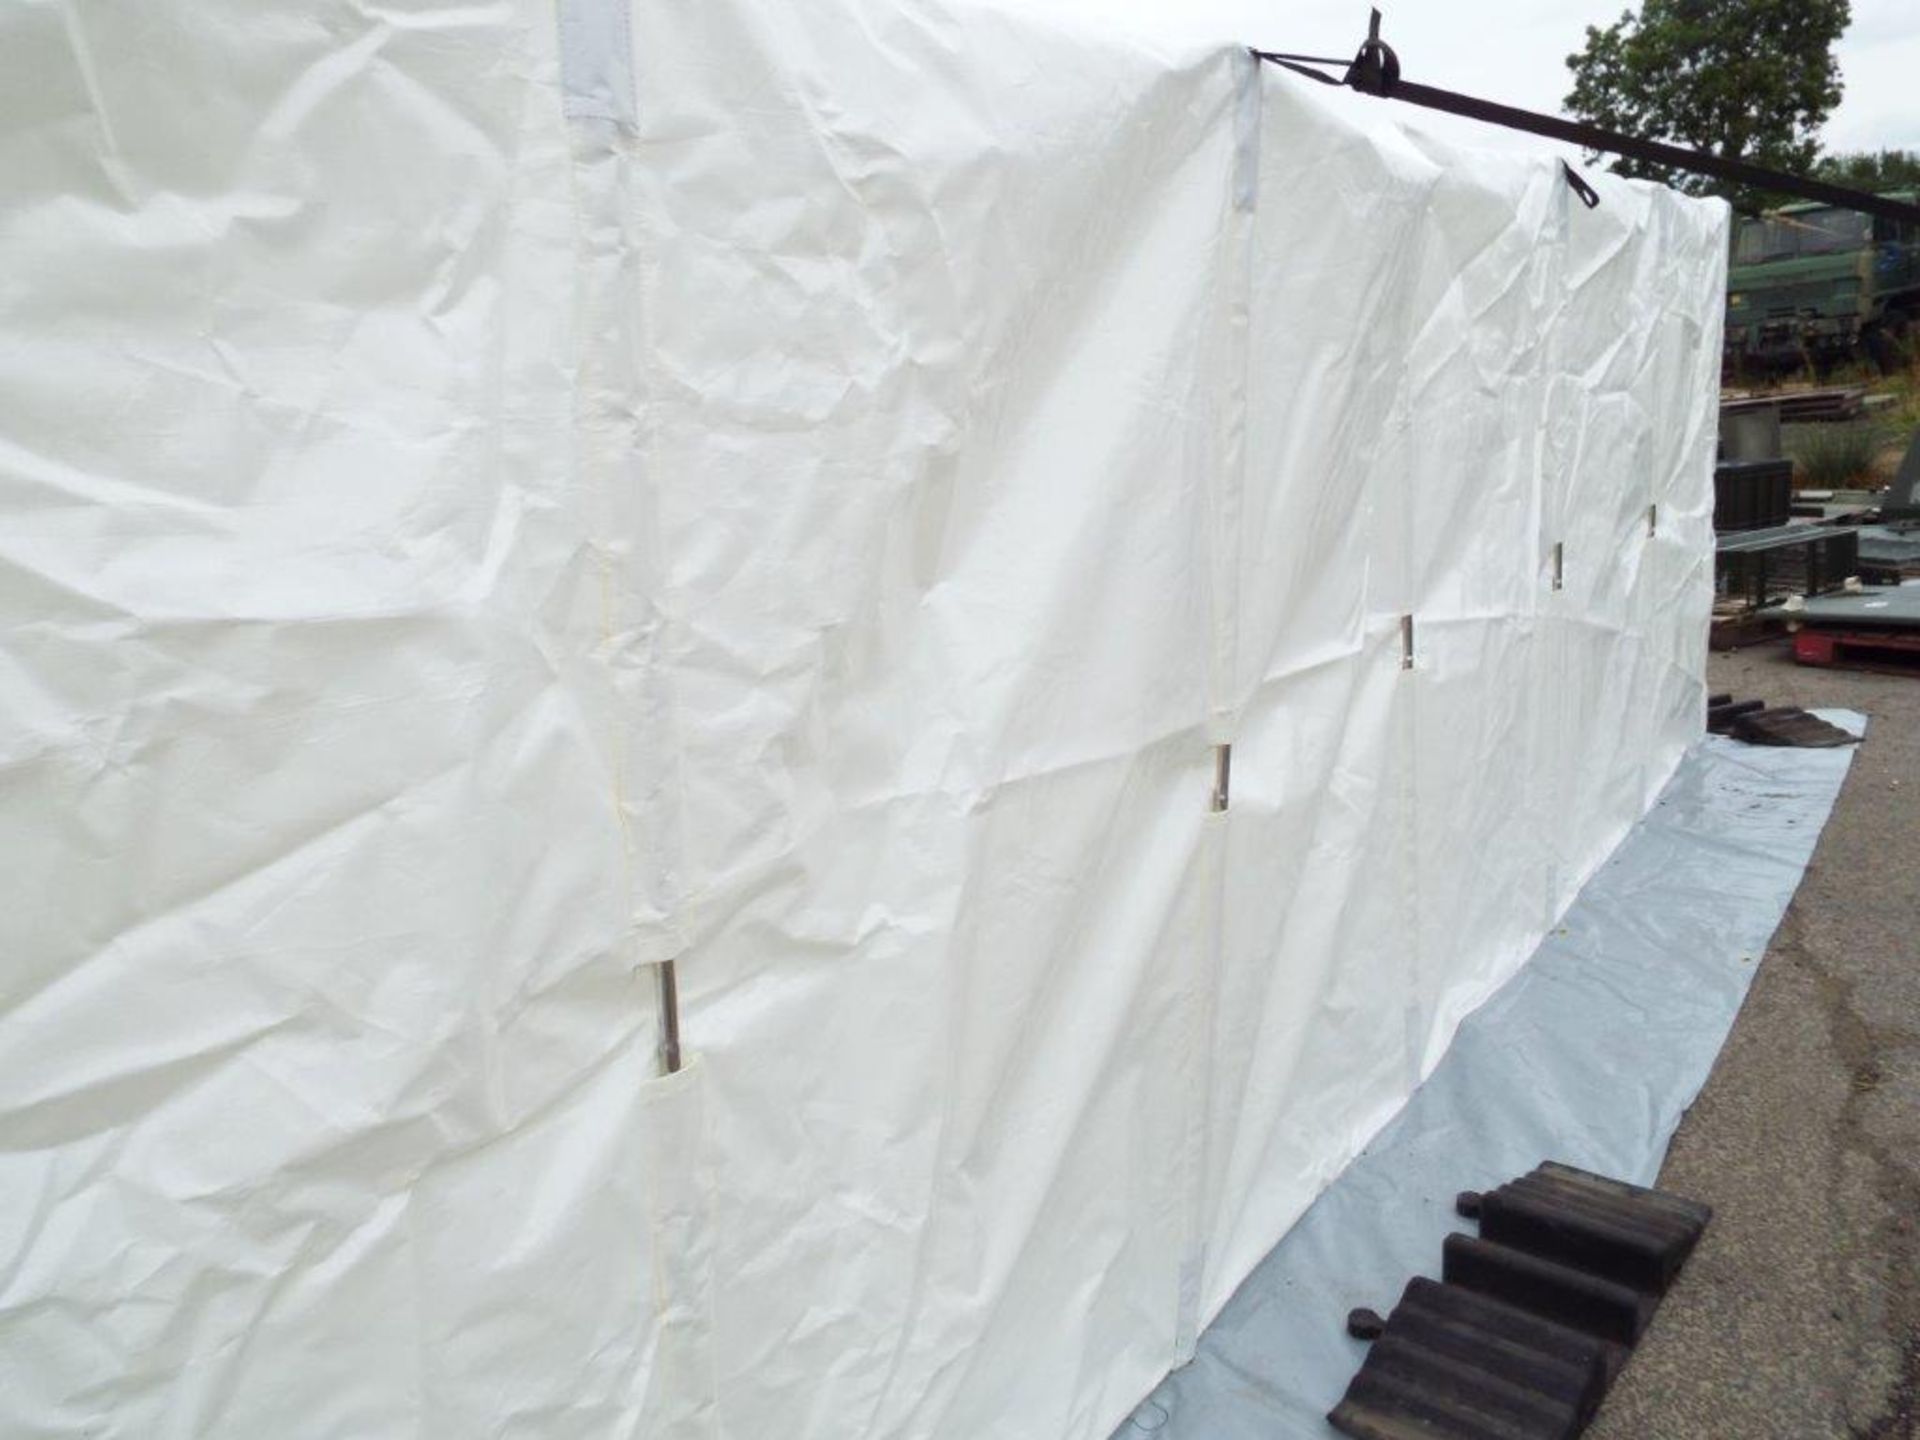 Unissued 8mx4m Inflatable Decontamination Tent - Image 5 of 15